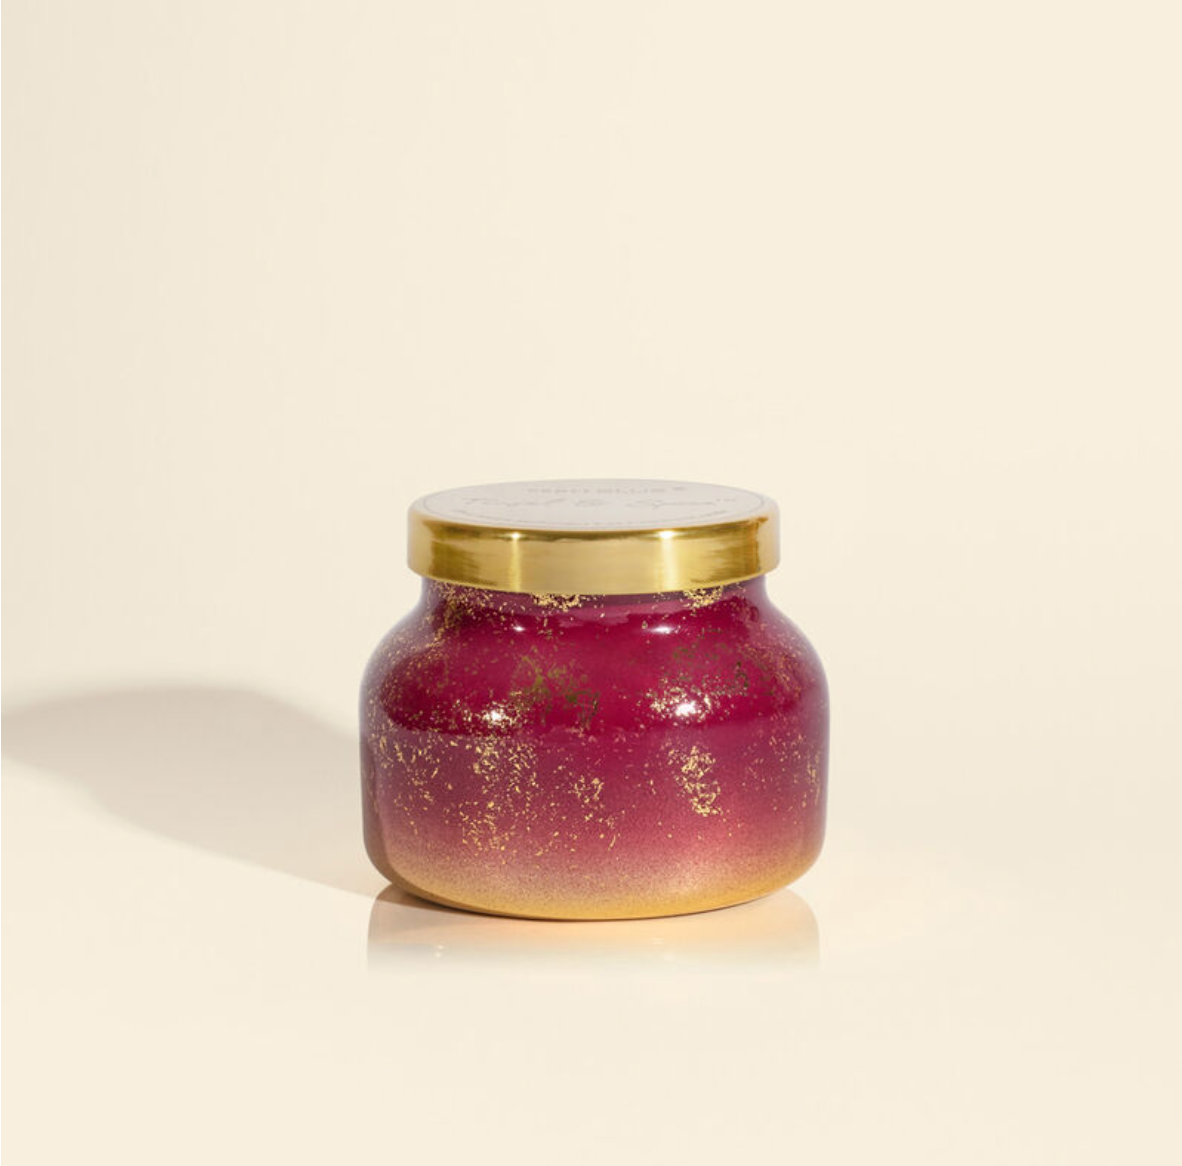 Tinsel & Spice Glimmer Petite Jar - 8oz